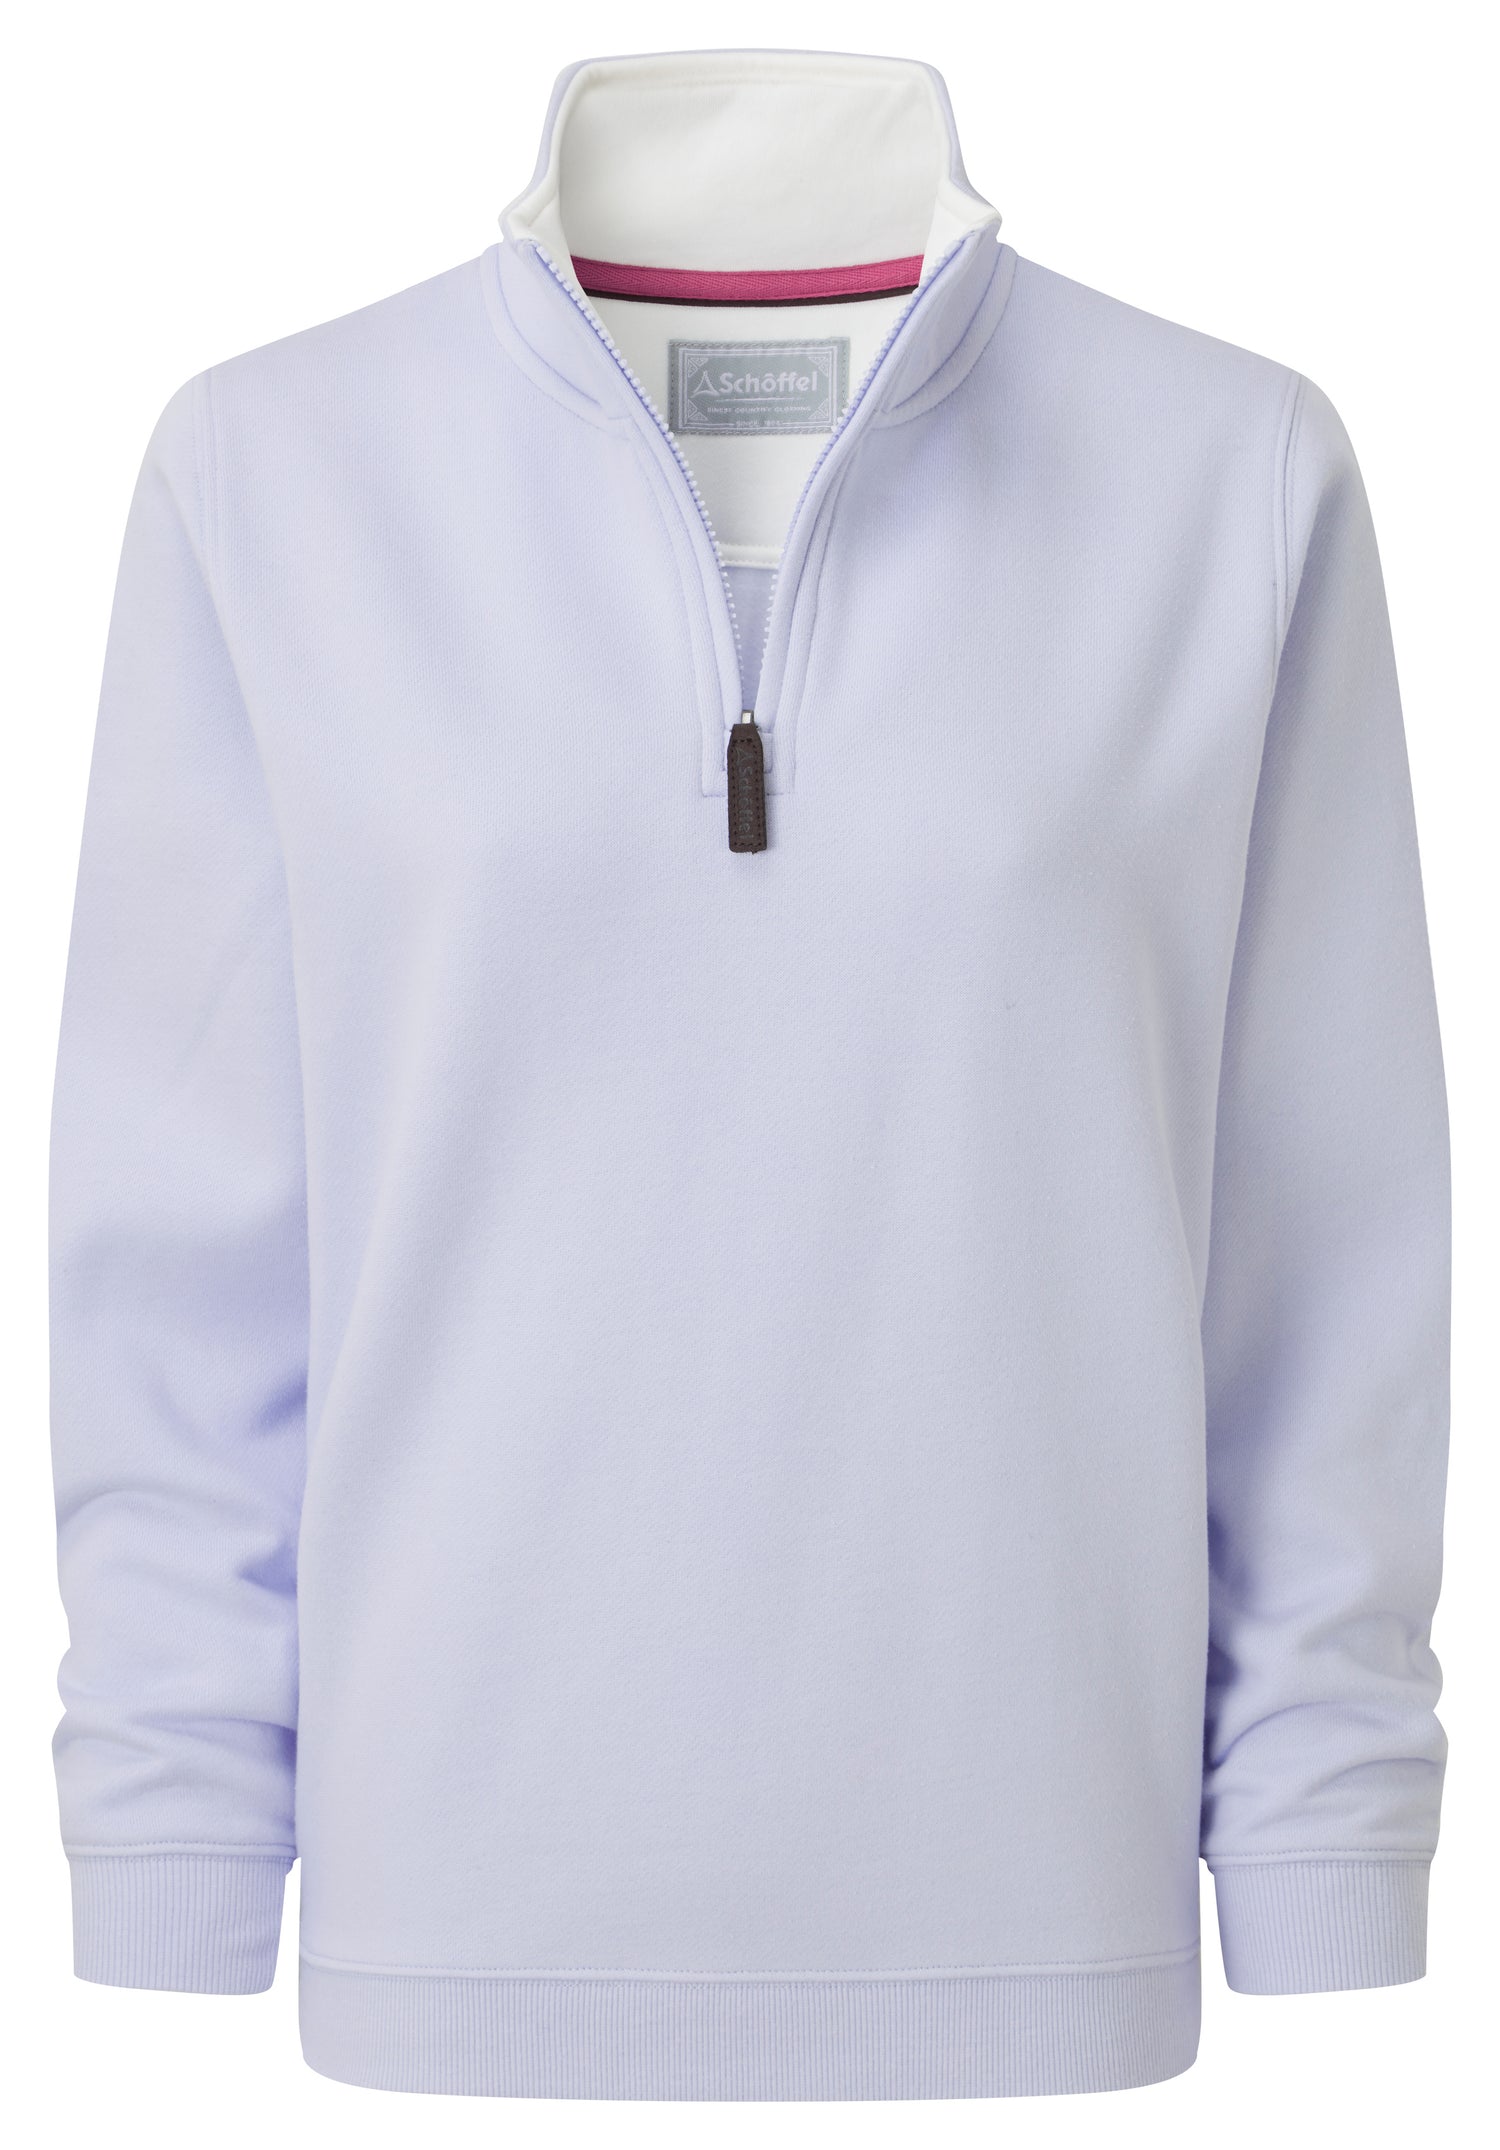 1/4 Zip Sweatshirt - Pale Blue